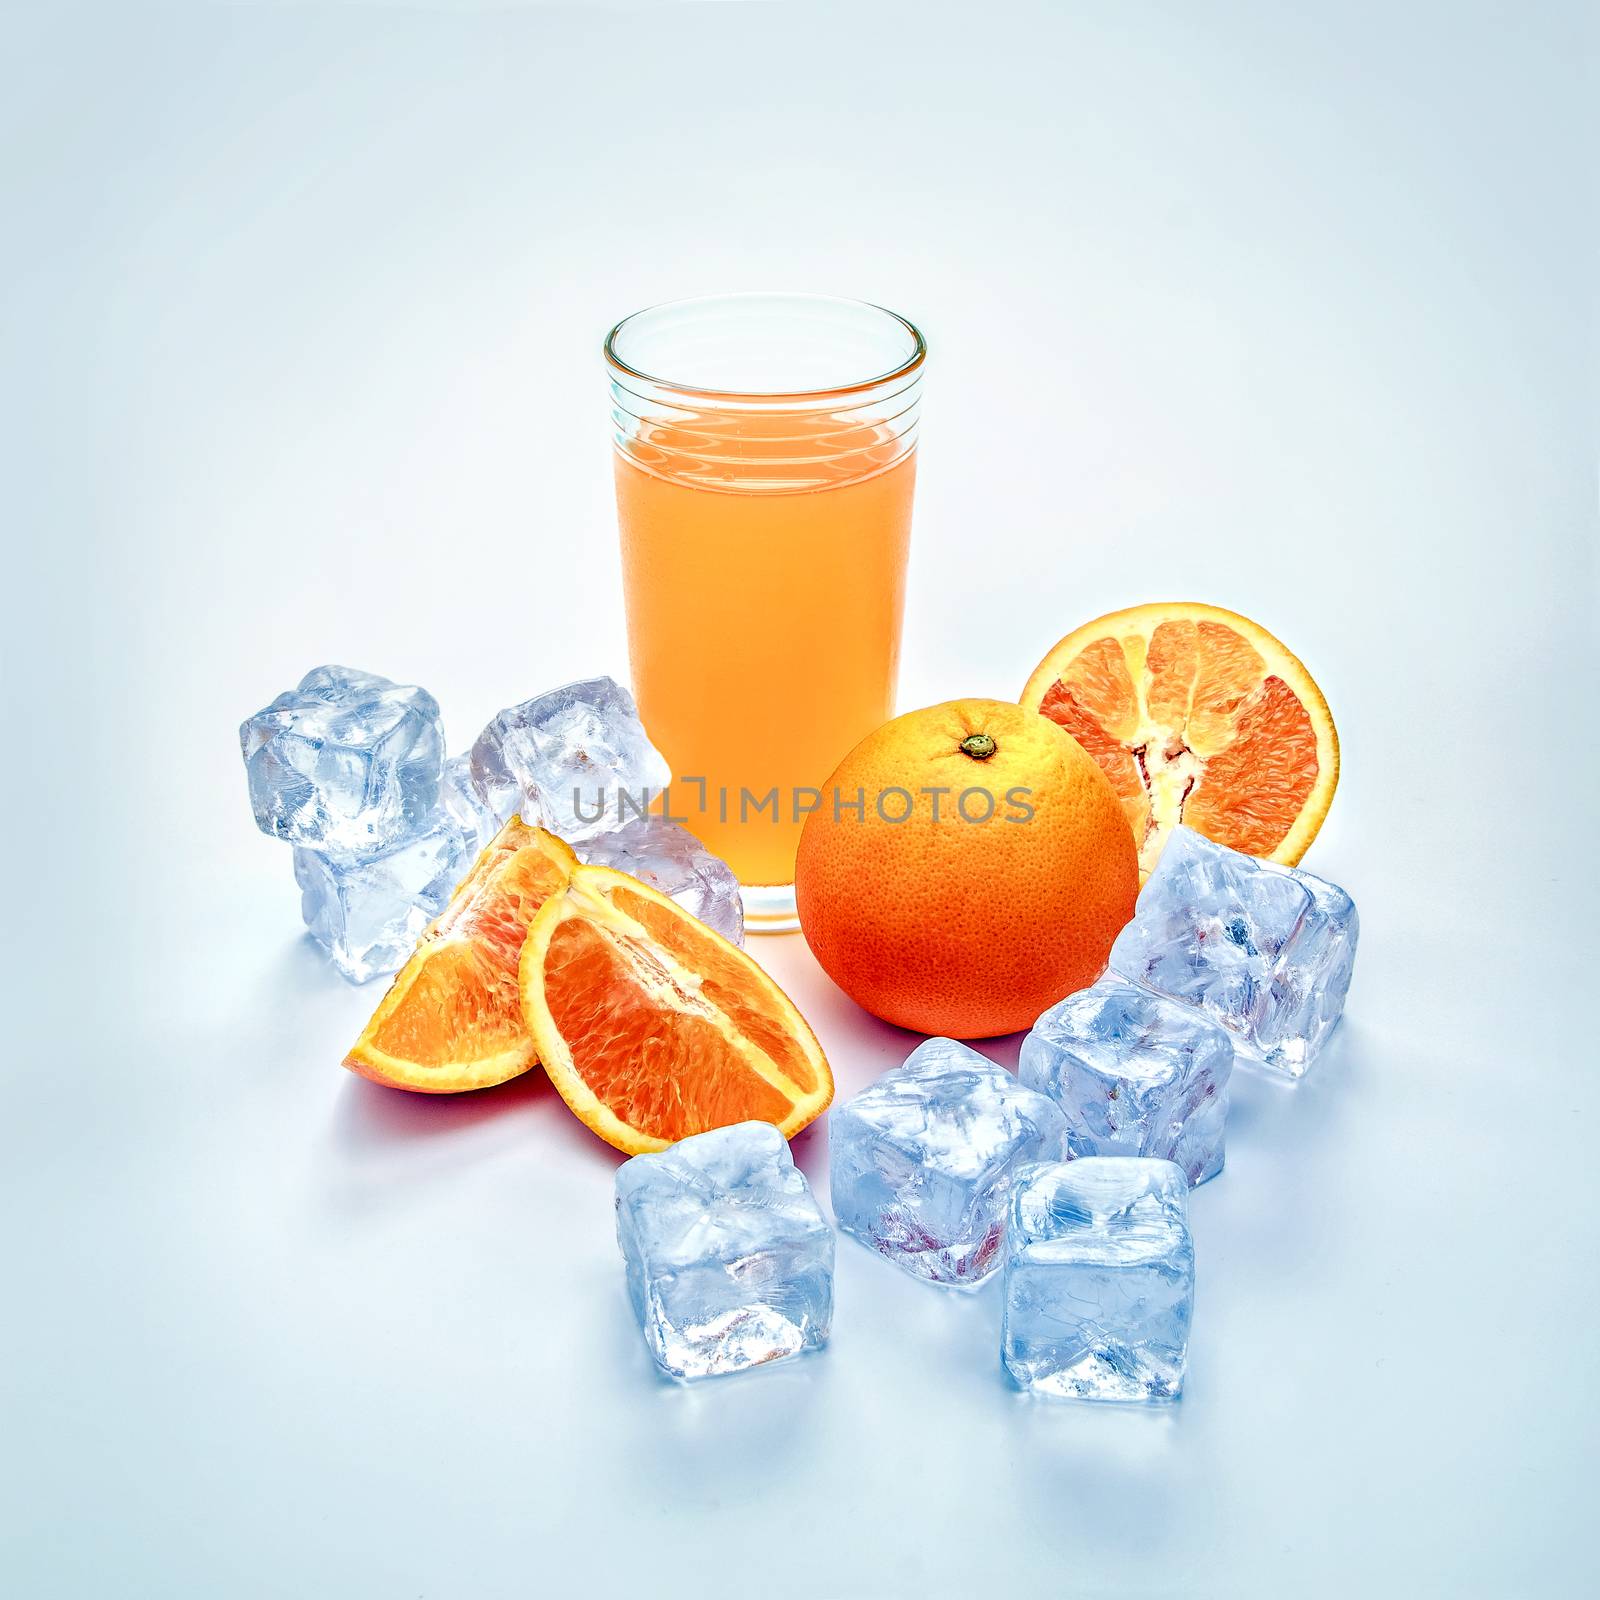 Cold orange juice by dynamicfoto